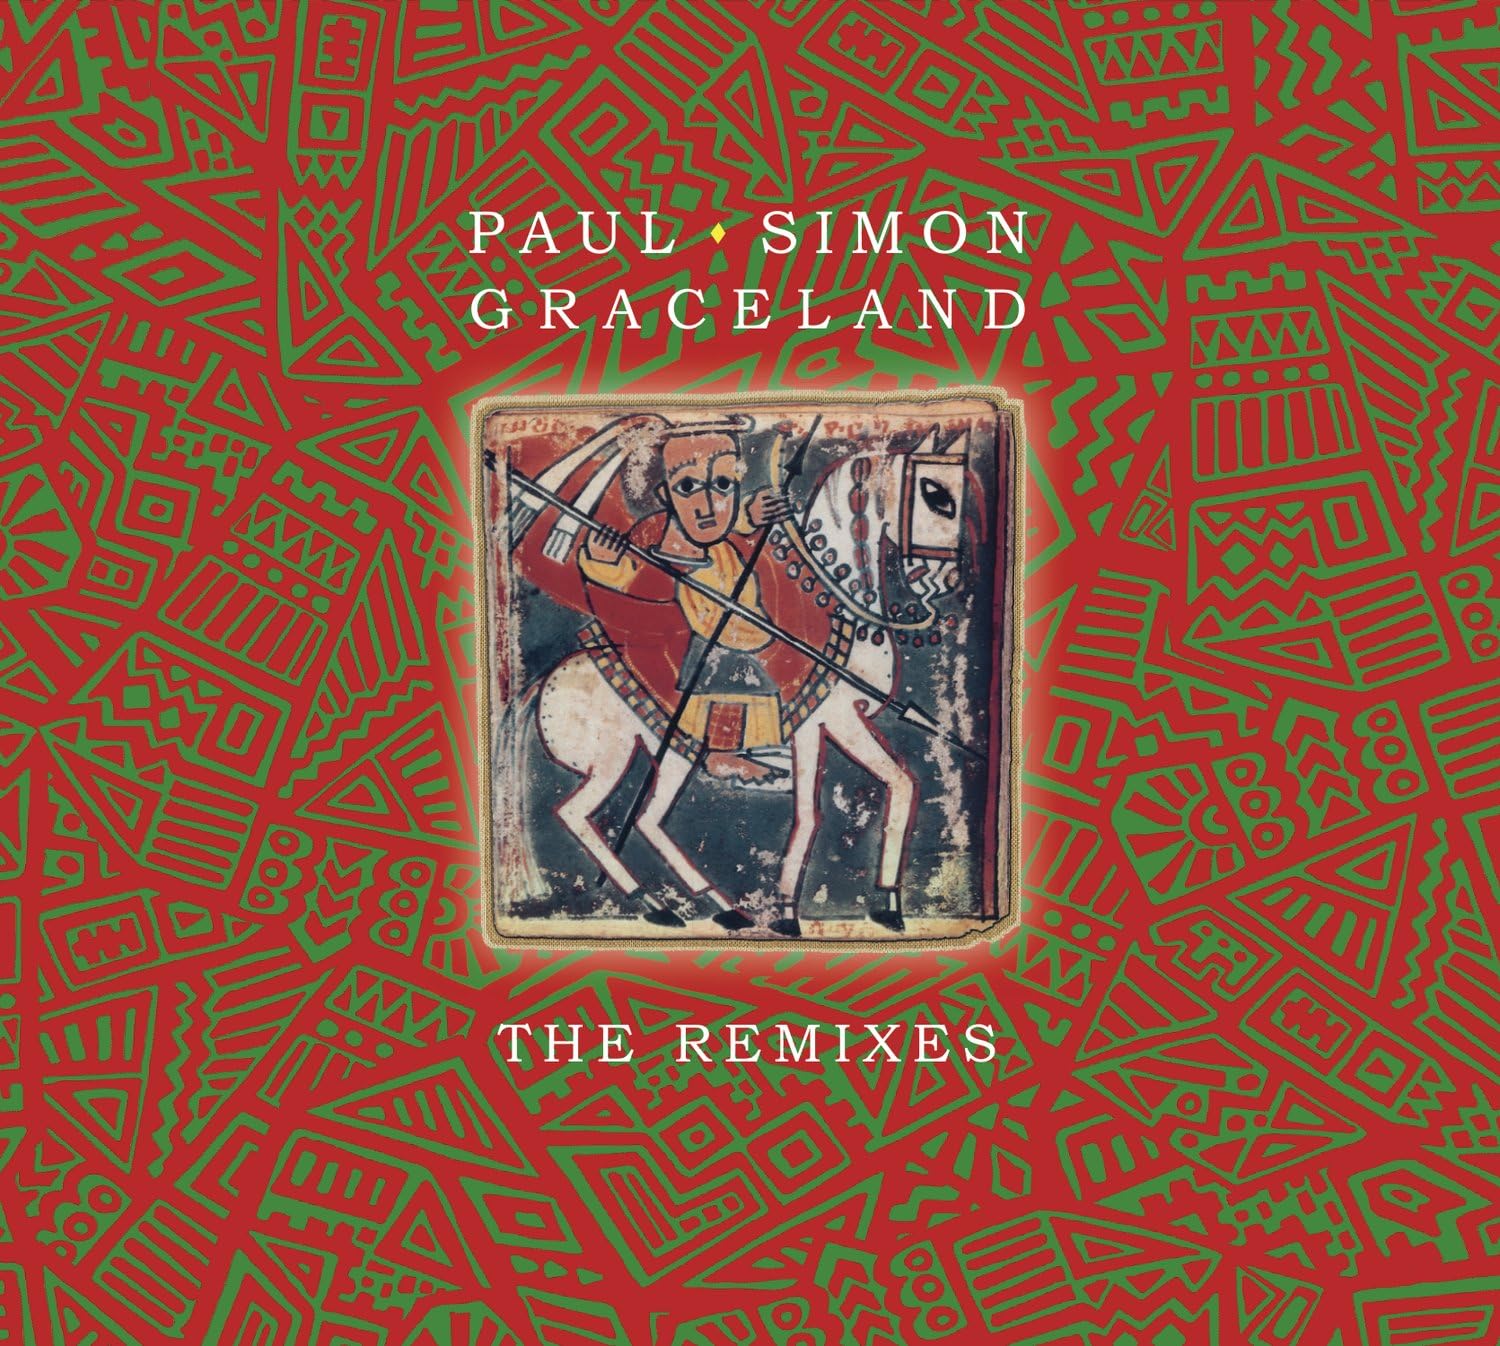 Paul Simon - Graceland (The Remixes) | Various Artists